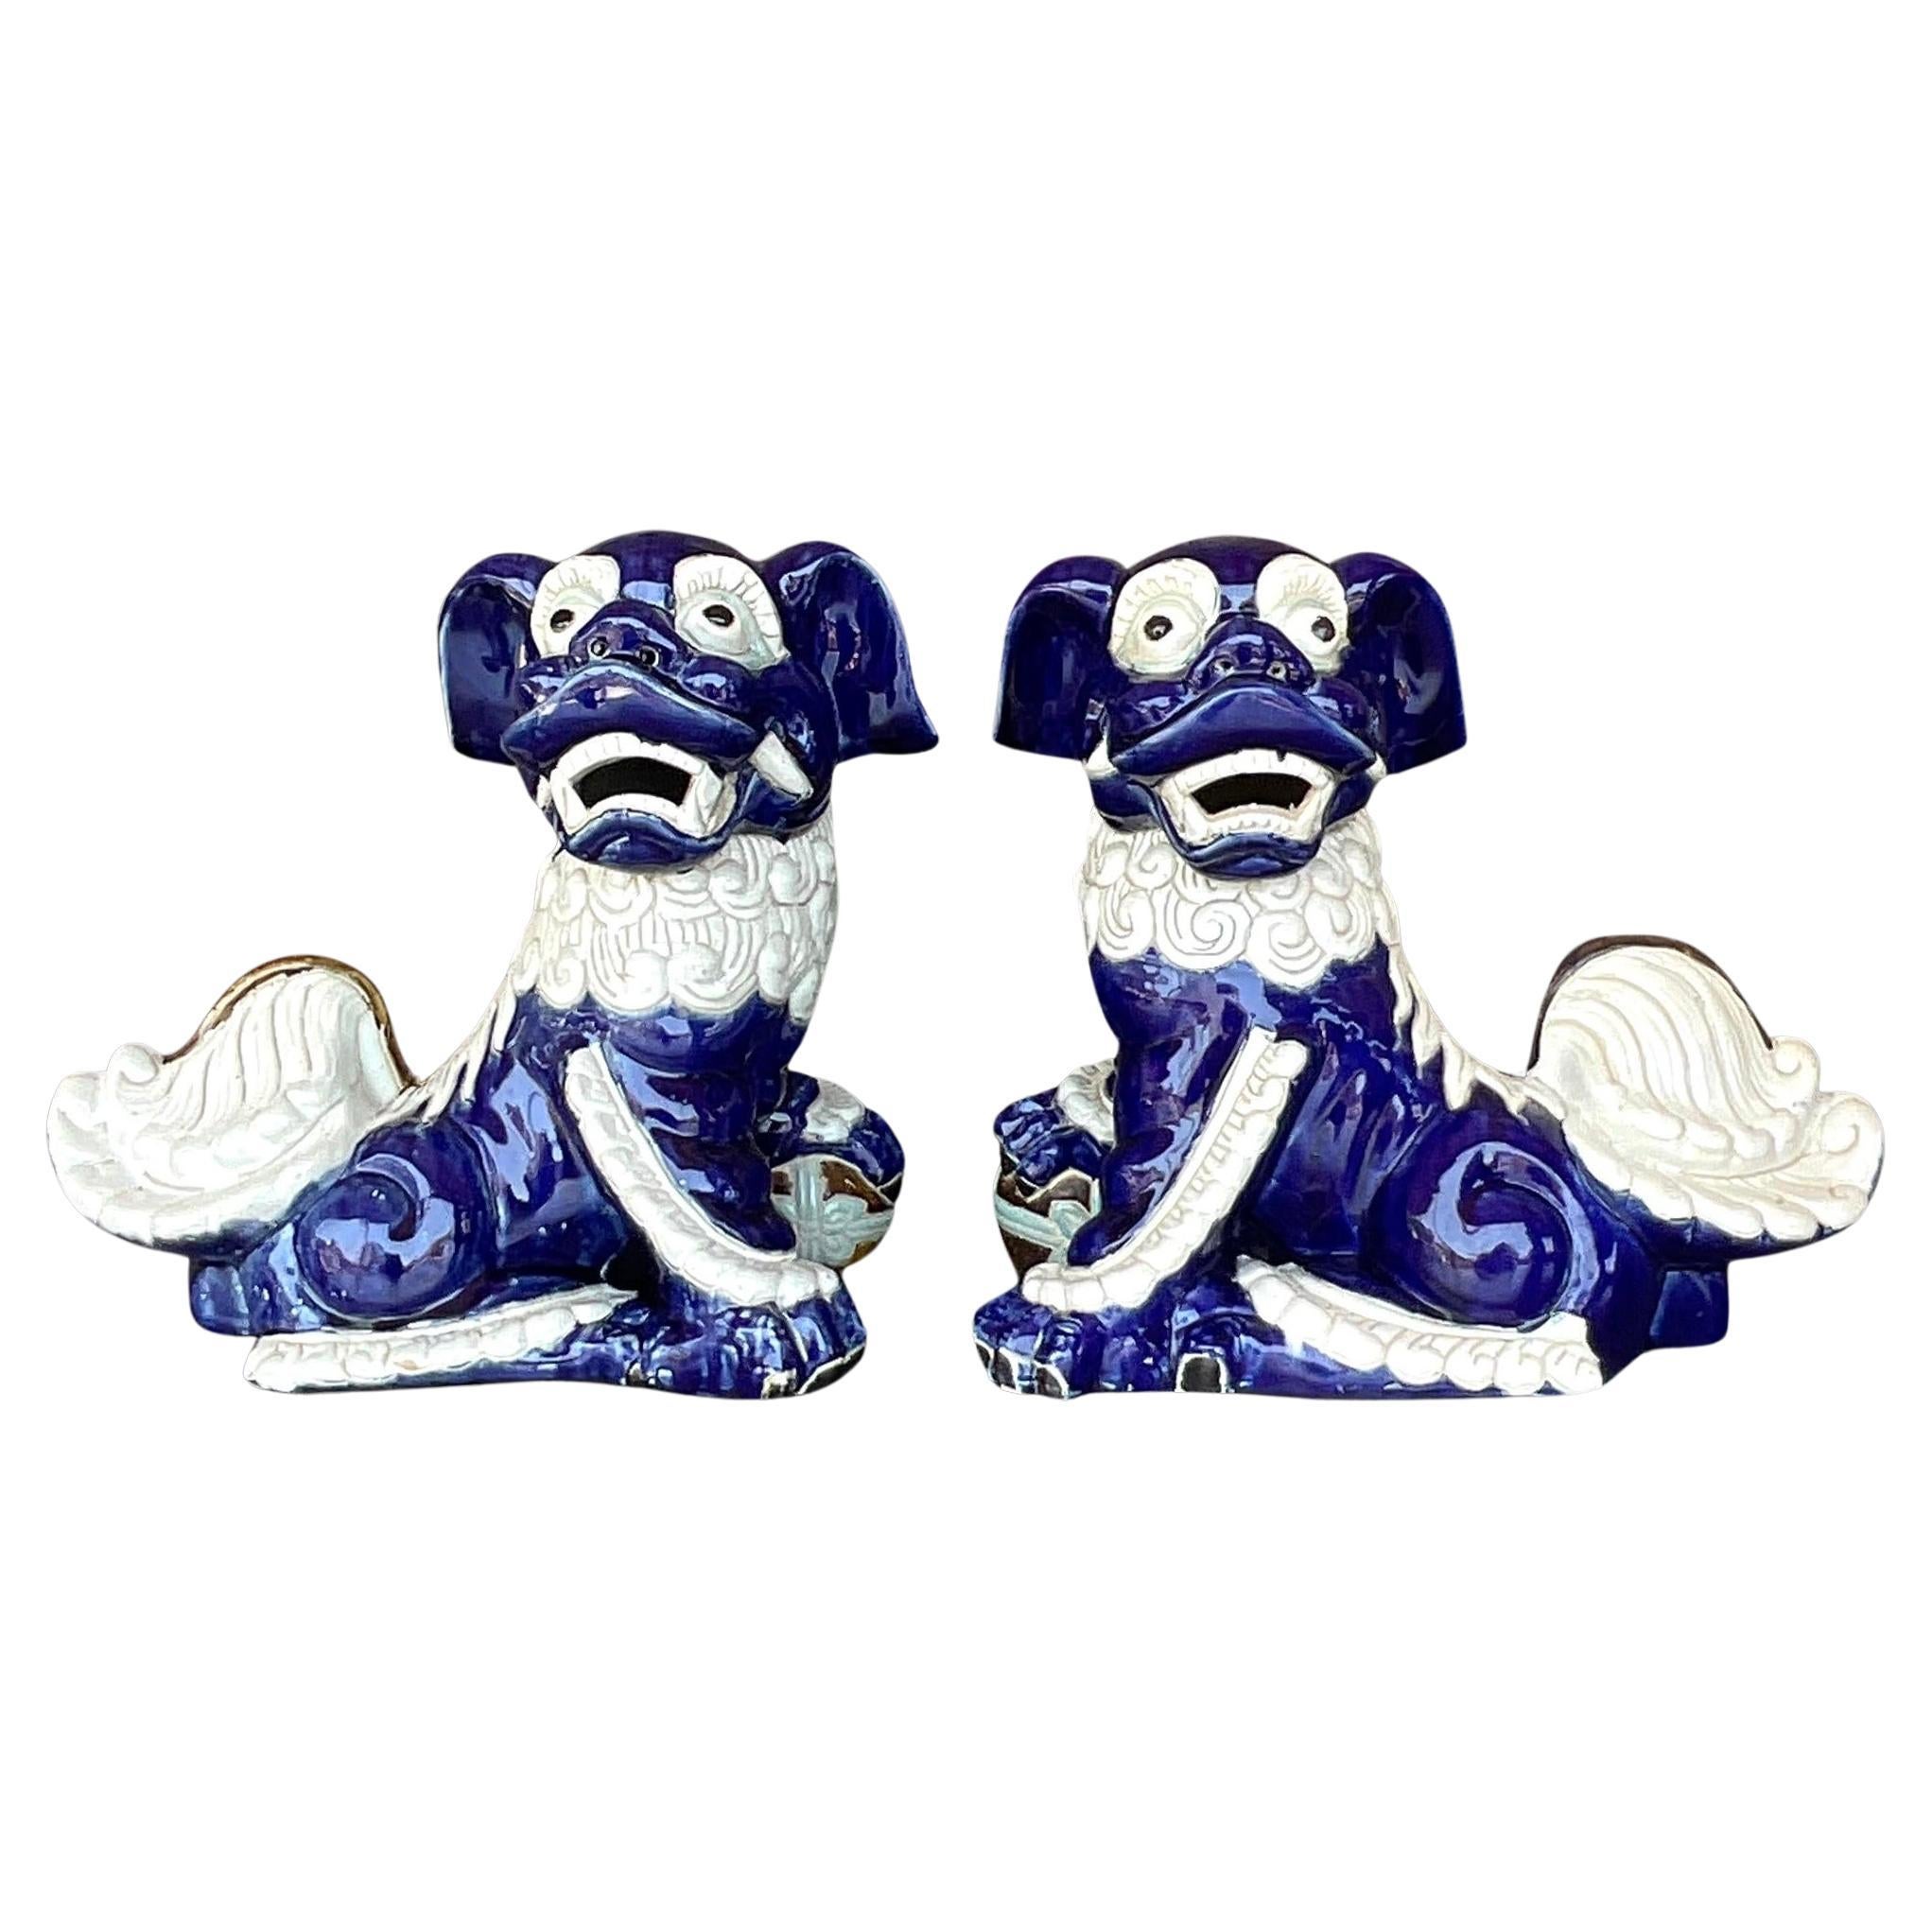 Vintage Regency Glazed Ceramic Foo Dogs - a Pair For Sale